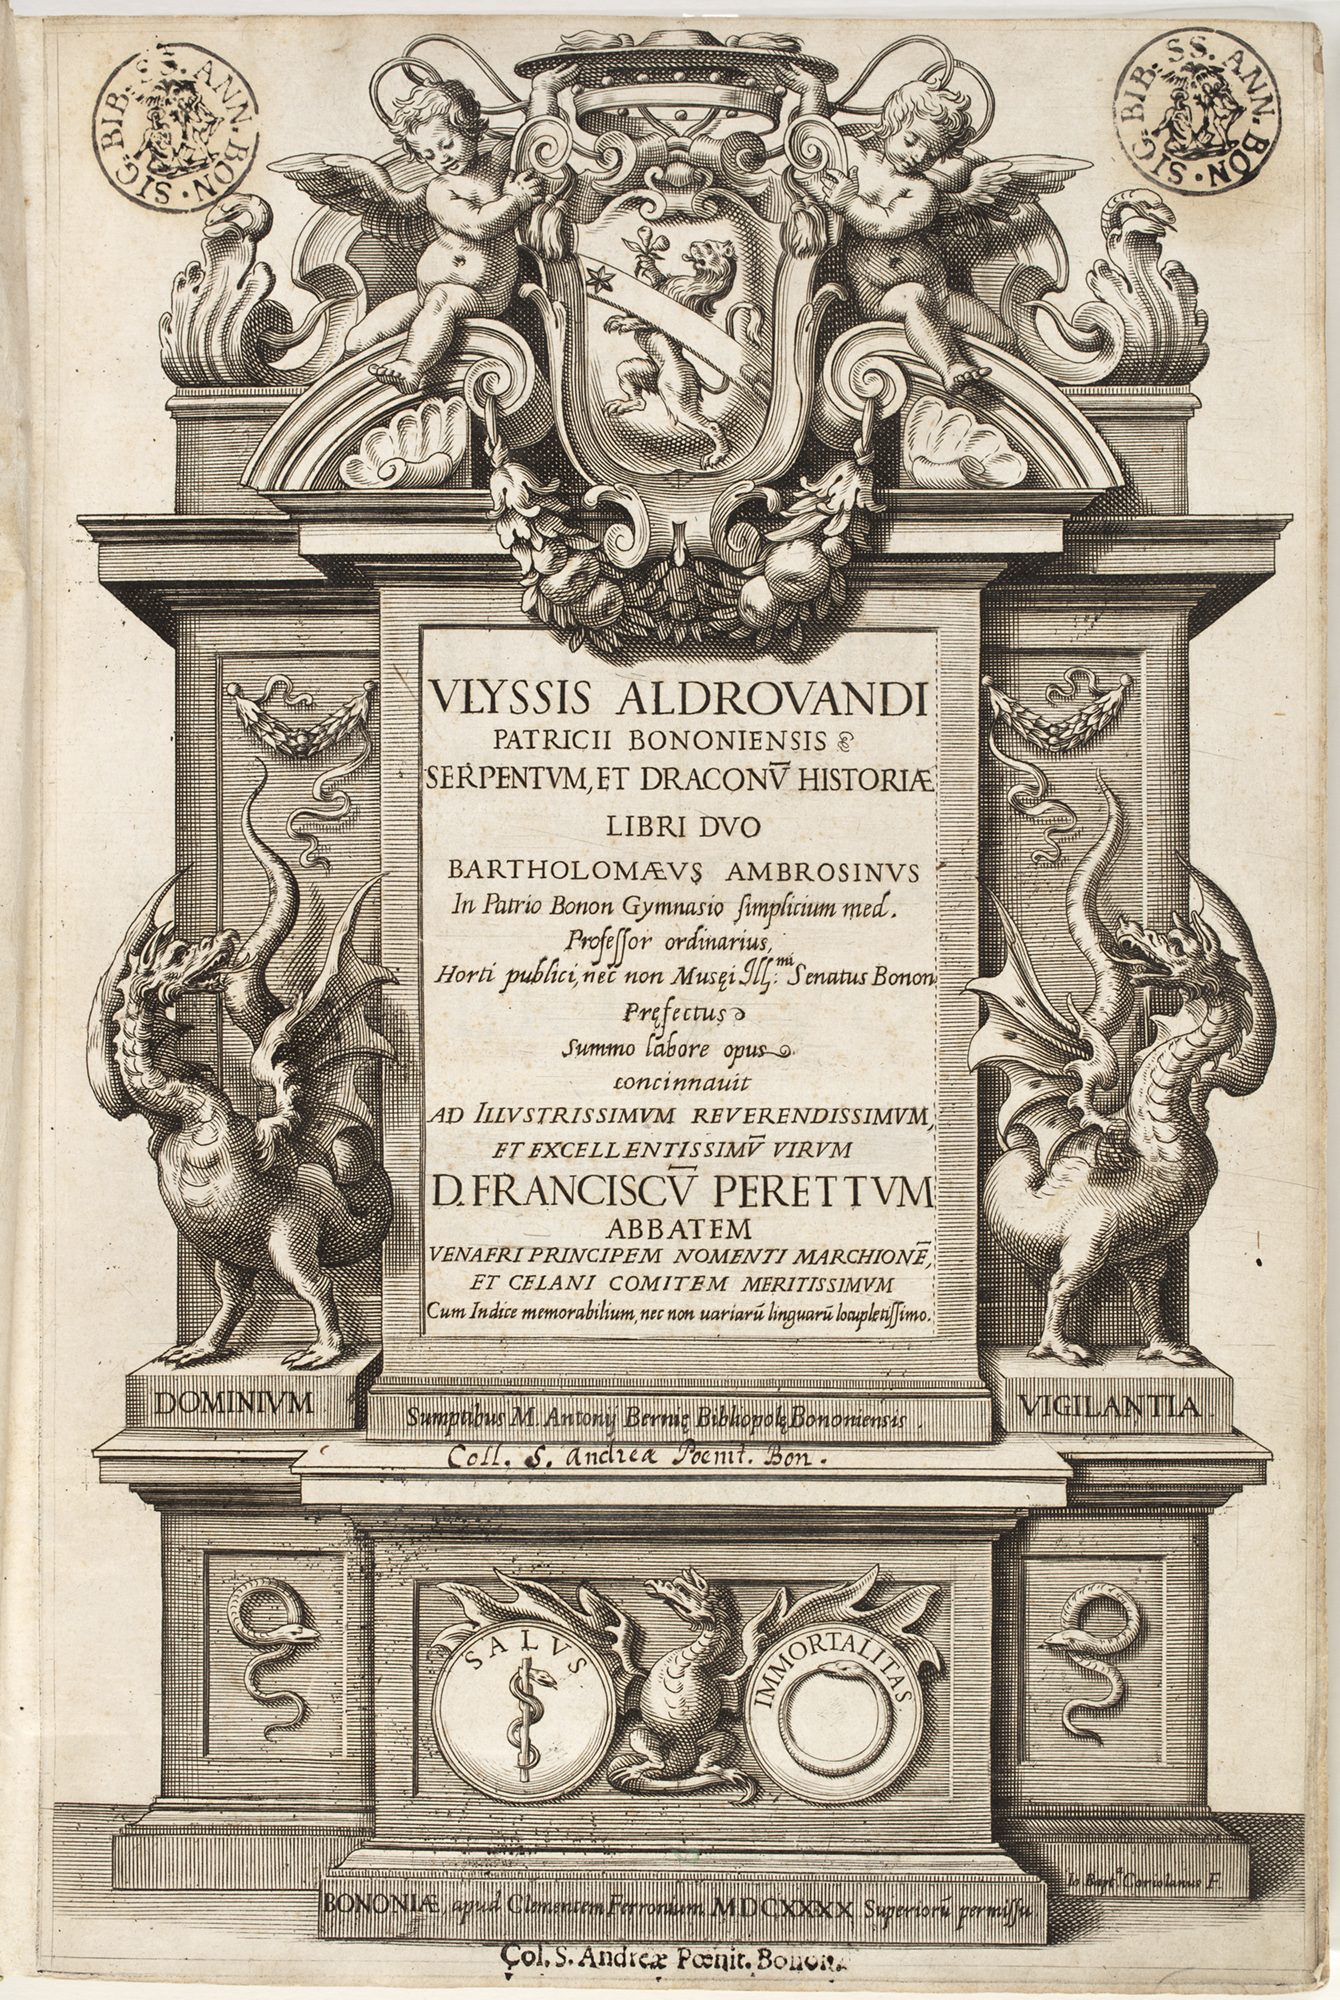 Vlyssis Aldrovandi patricii Bononiensis Serpentum, et draconu[m] historiae libri duo, 1640, by Vlyssis Aldrovandi